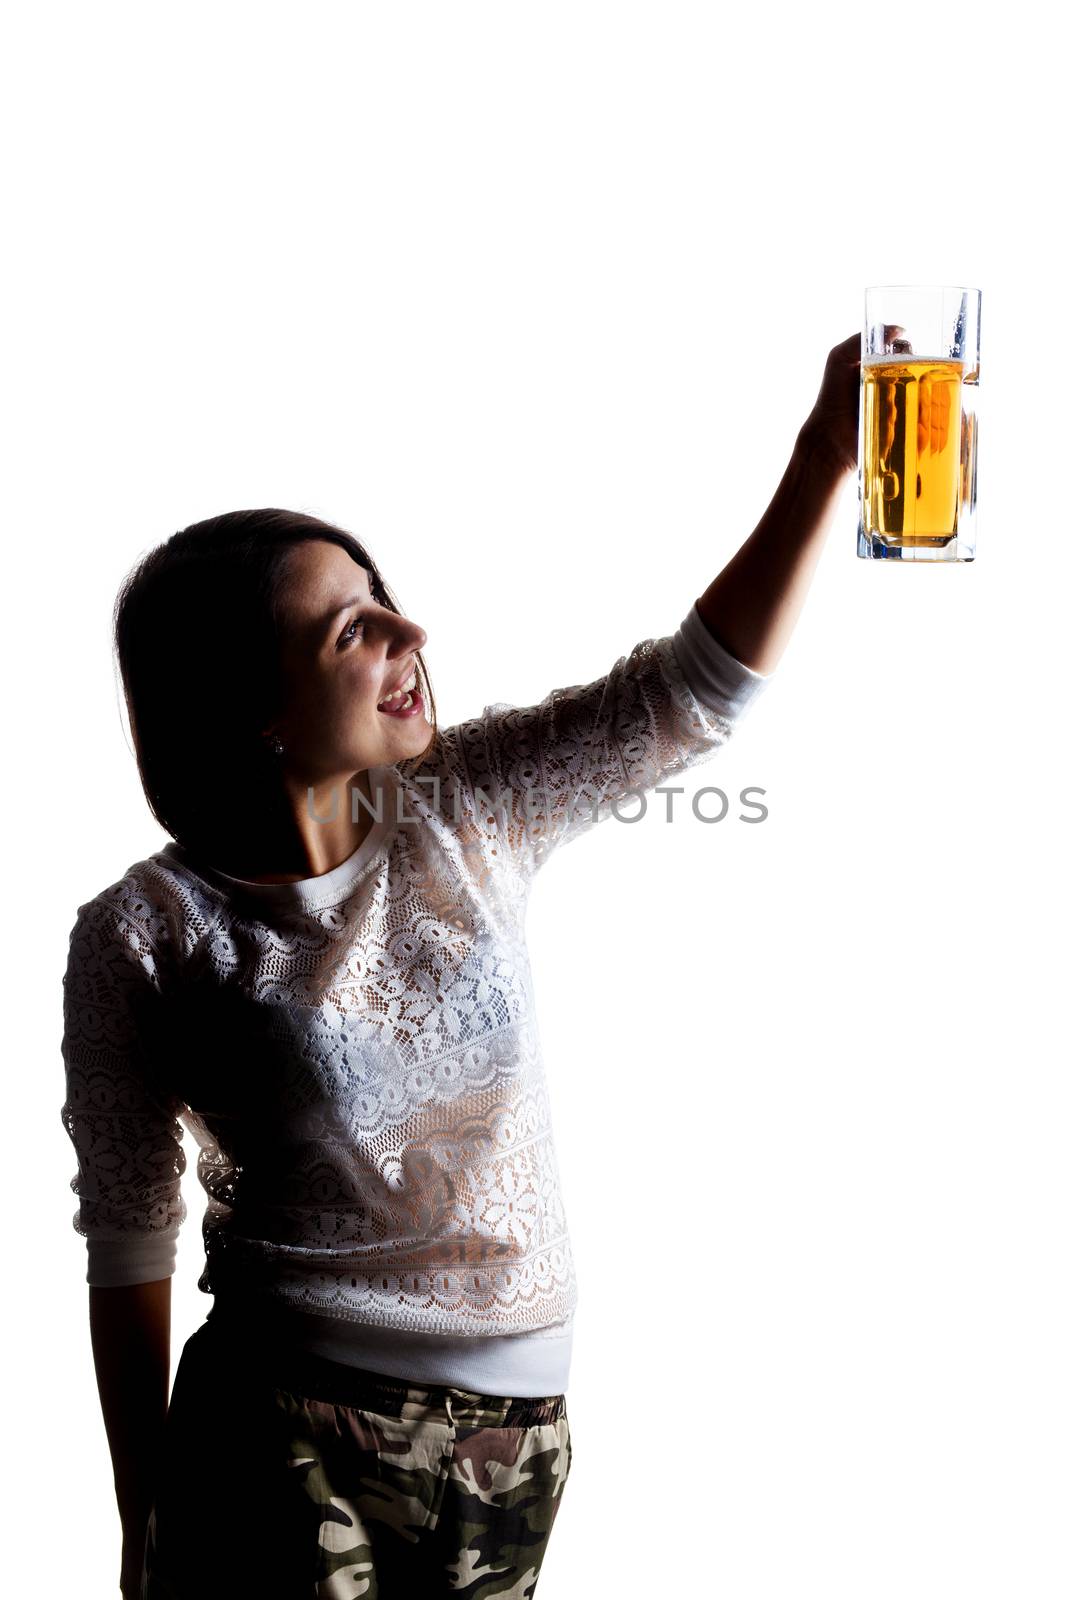 happy girl cheering with beer mug by kokimk